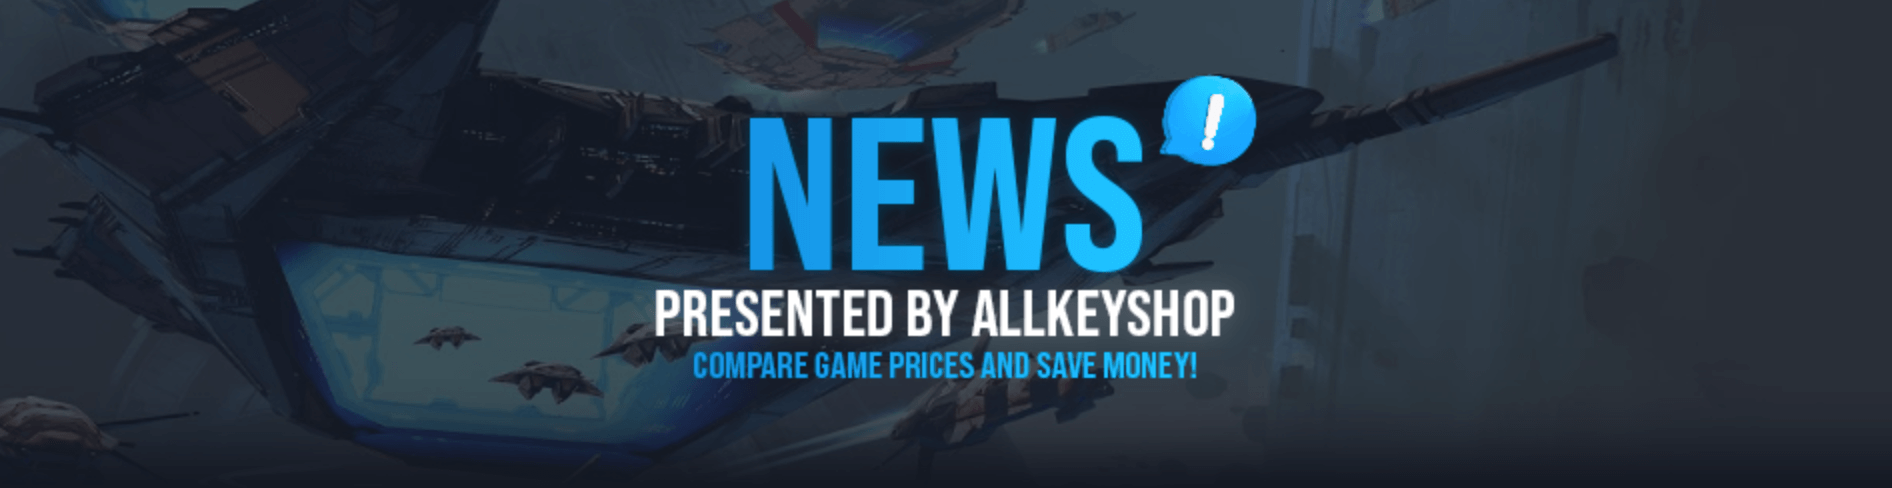 News Presented by Allkeyshop